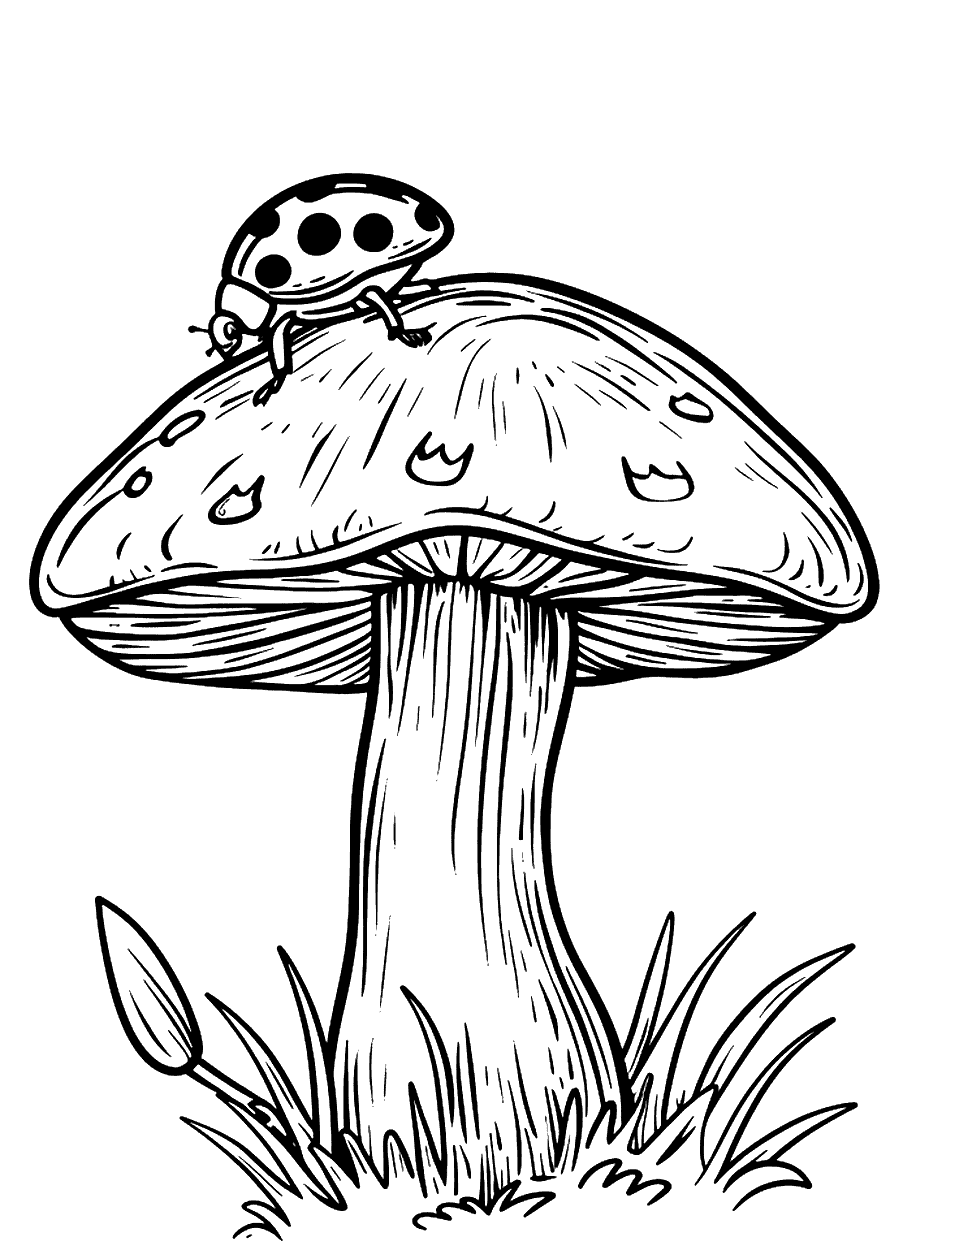 Mushroom and Ladybug Coloring Page - A ladybug on a mushroom, its back contrasting with the mushroom.